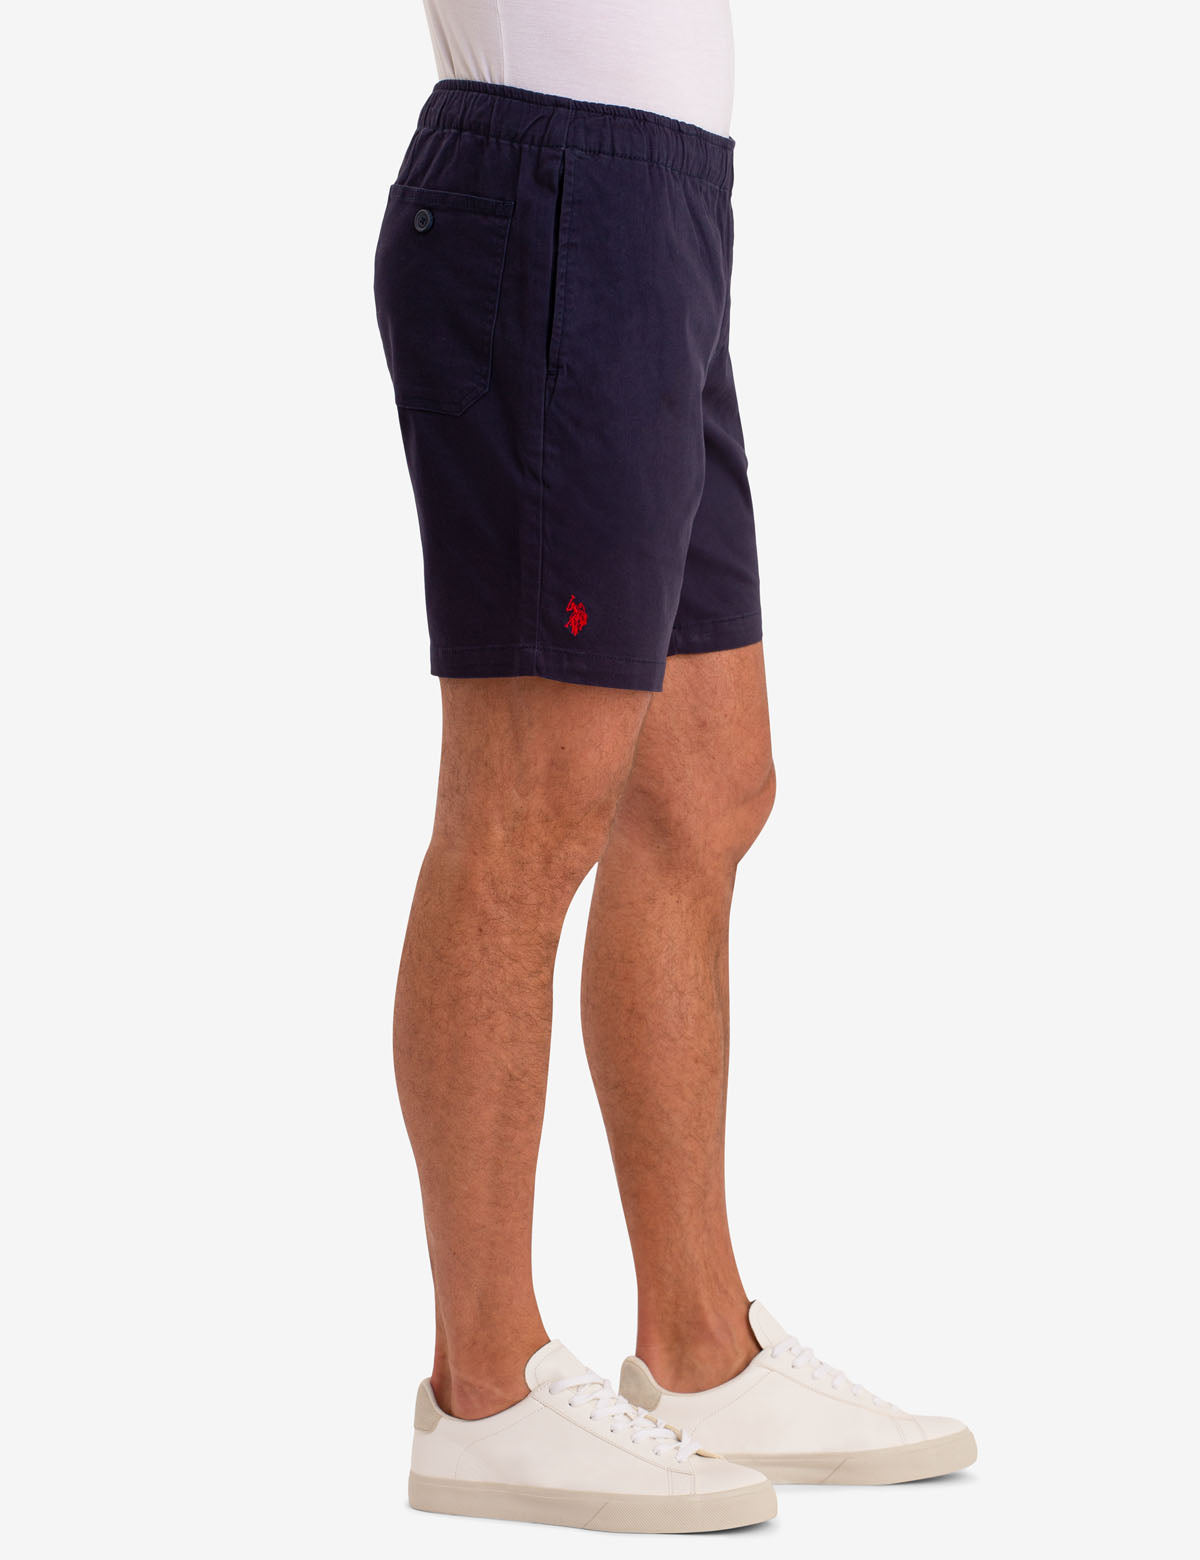 polo jogger shorts